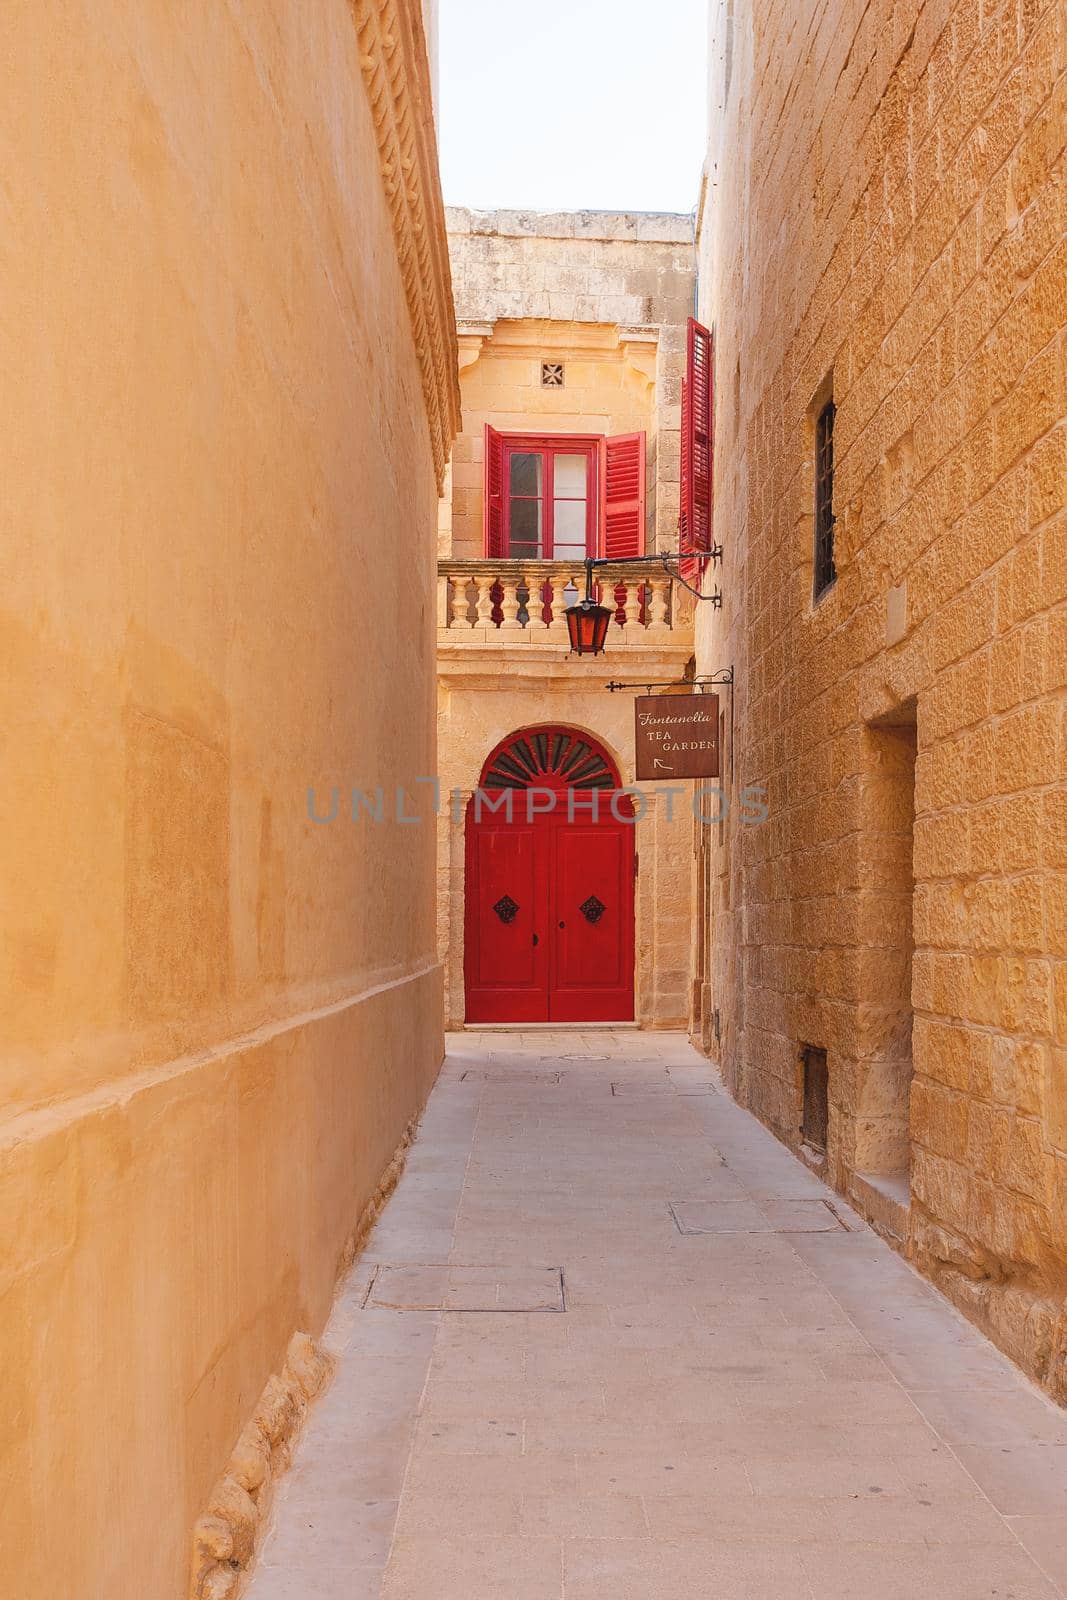 MDINA, MALTA - February 18, 2010. Narrow streets of Mdina, old capital of Malta. Stone buildings with old fashioned doors and balconies. by aksenovko